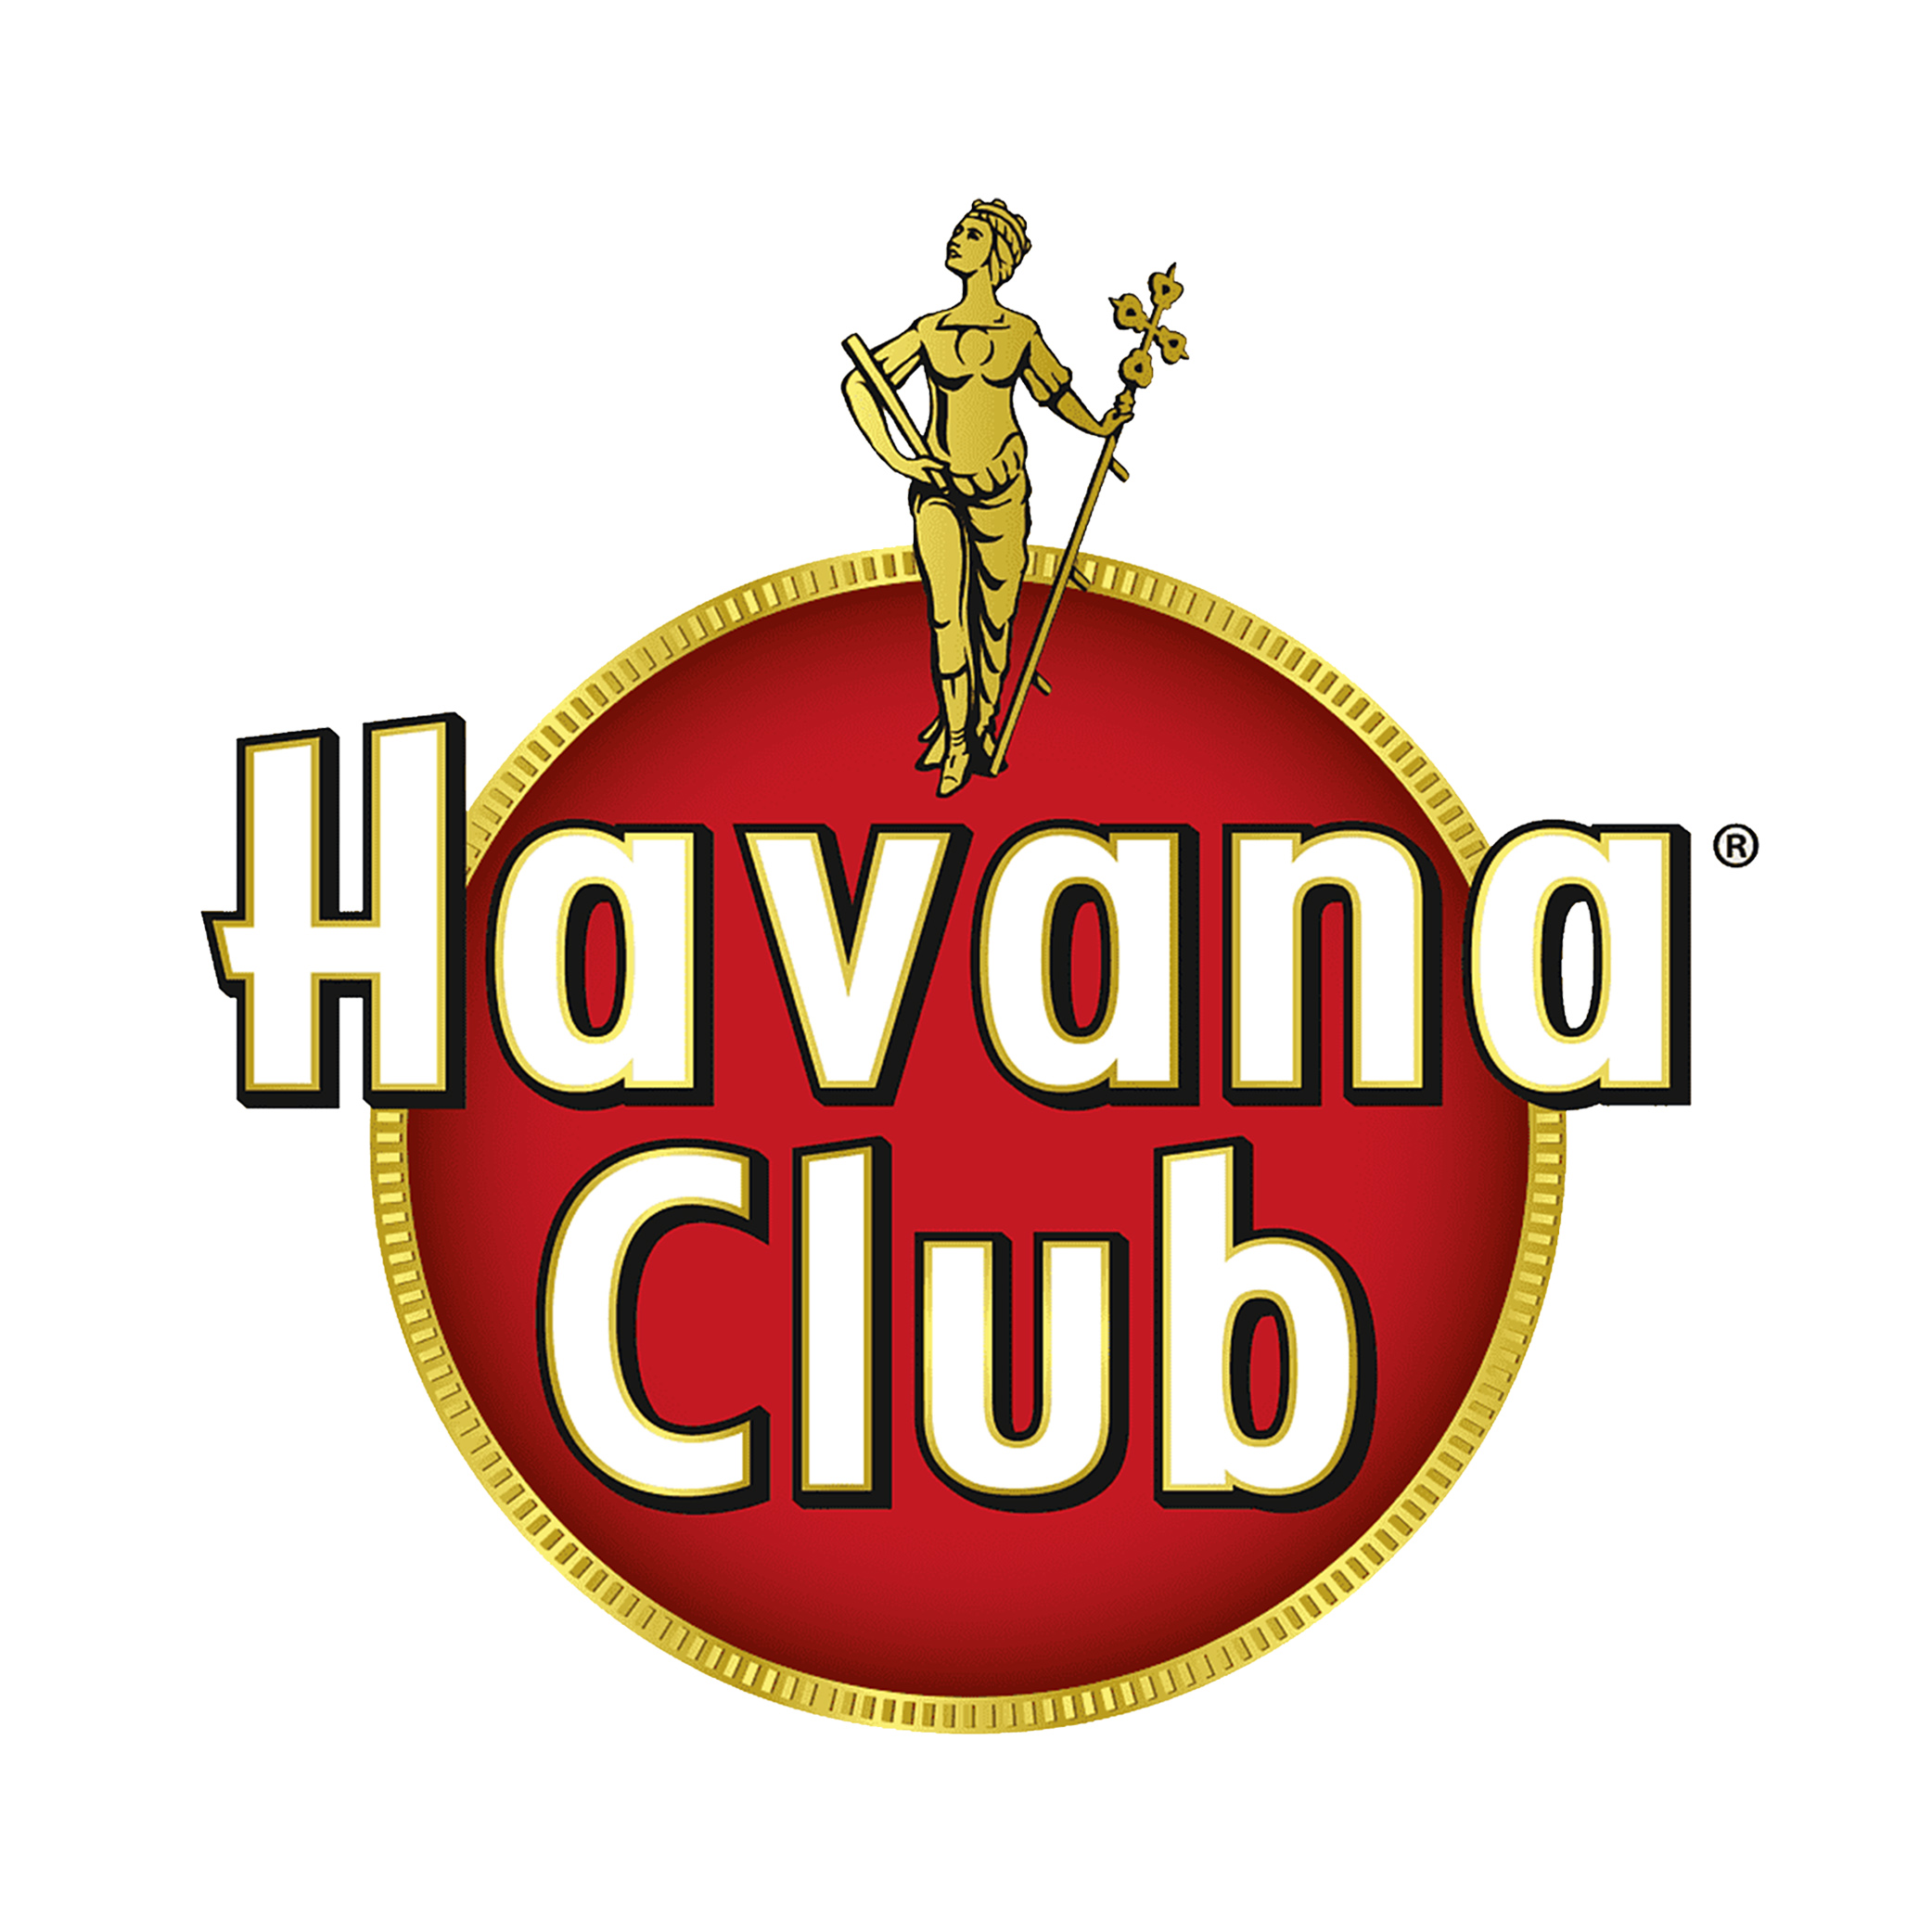 Pancaniaga Indoperkasa - Havana Club